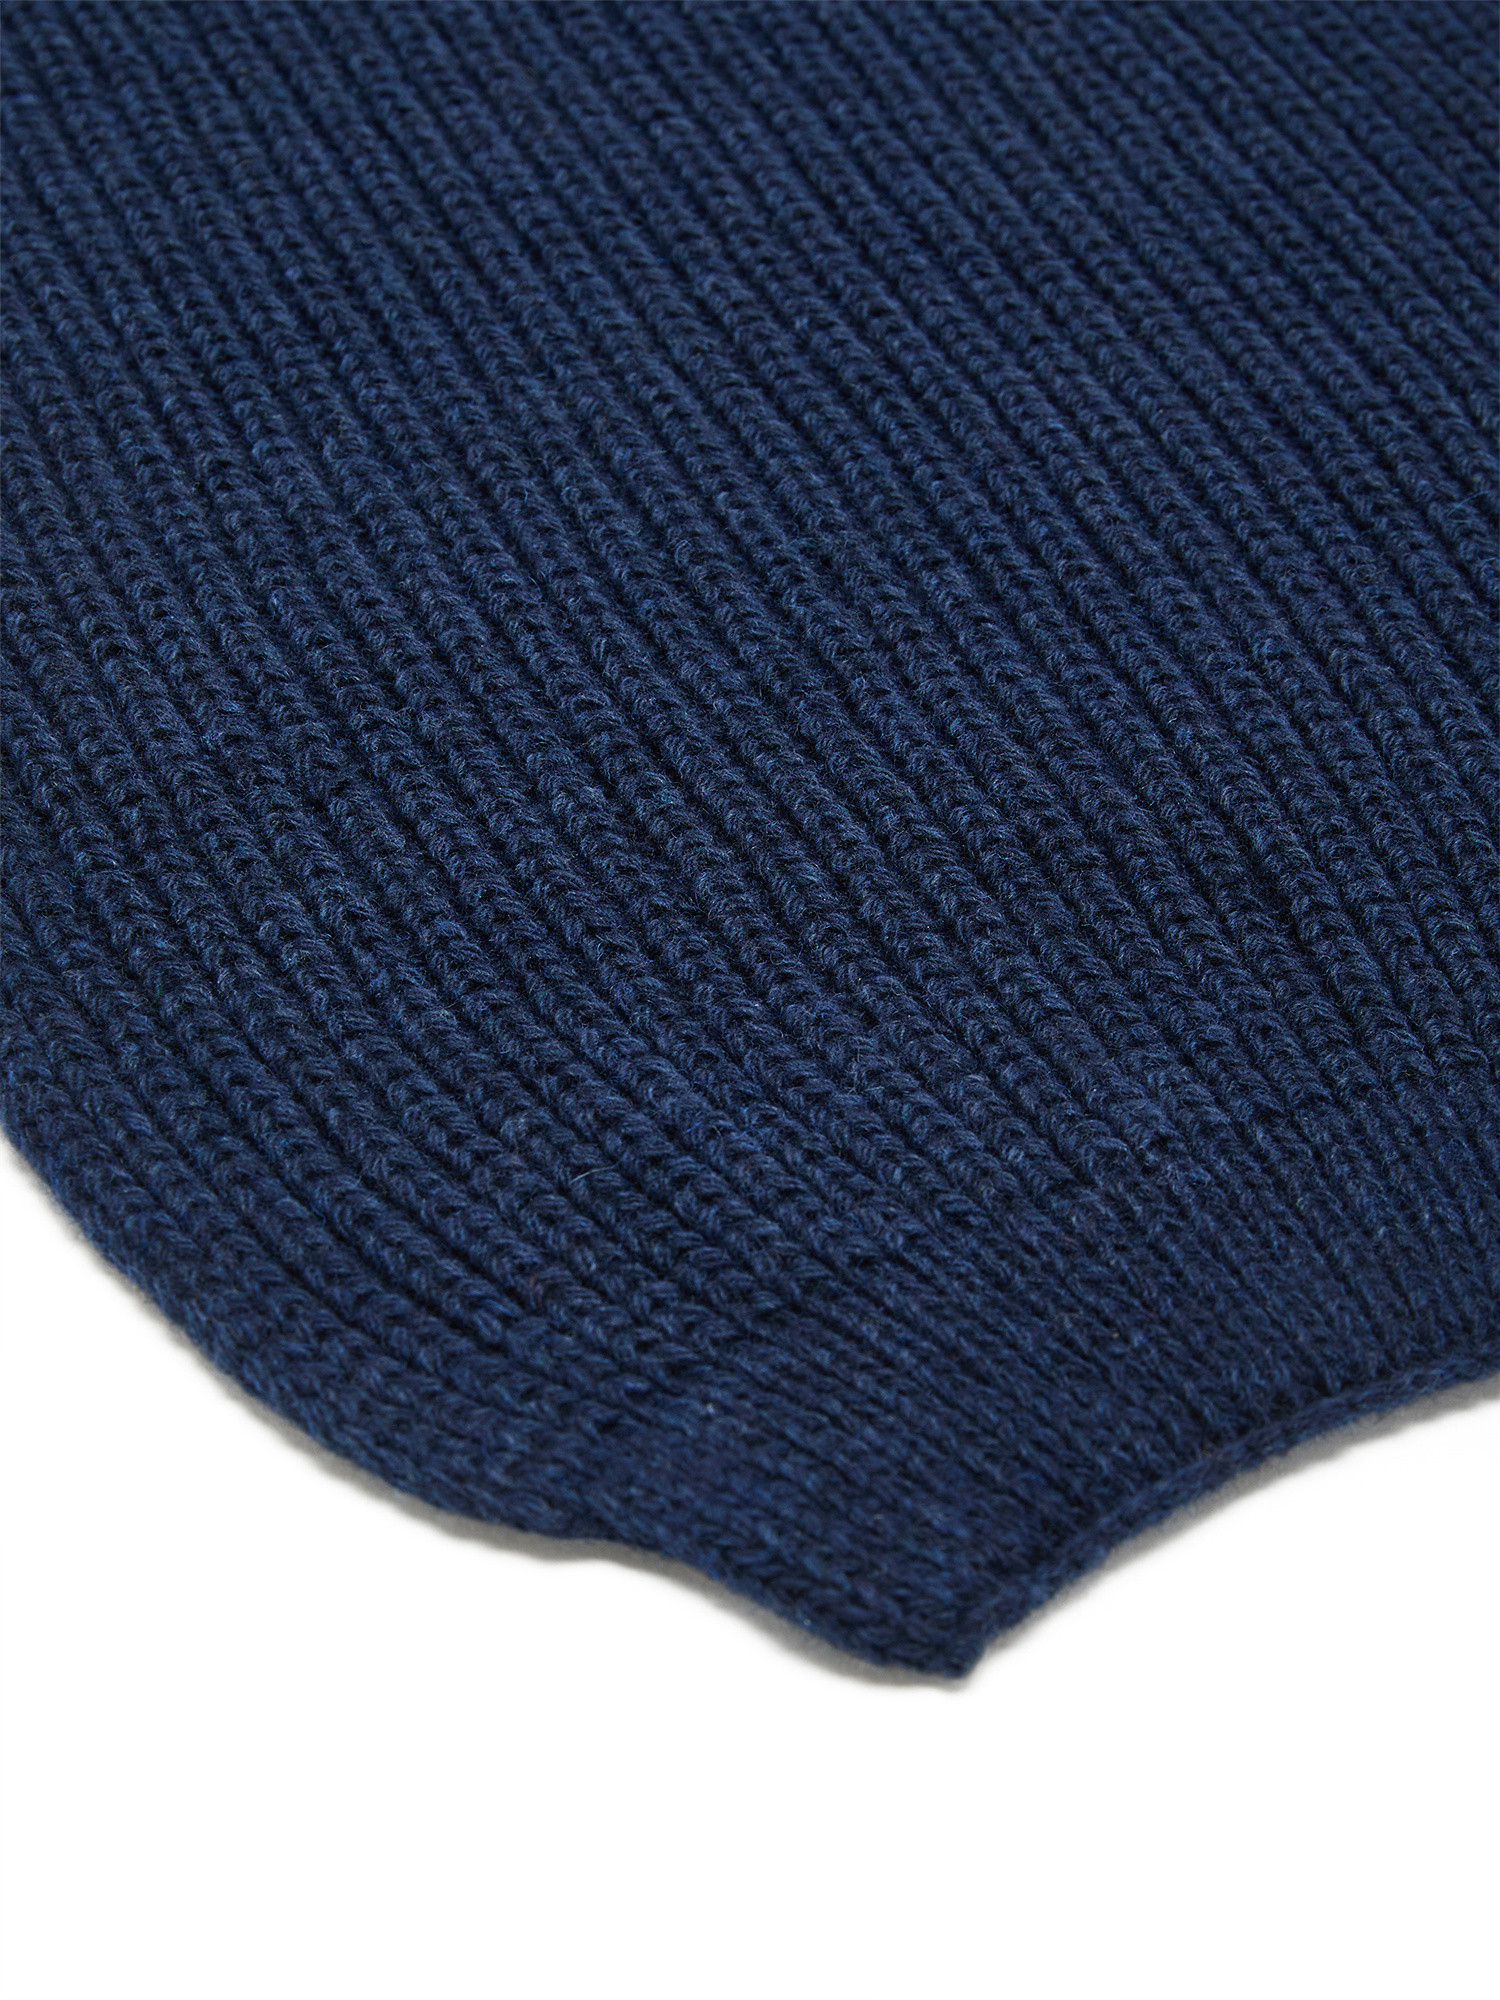 Luca D'Altieri - English rib stitch scarf, Blue, large image number 1